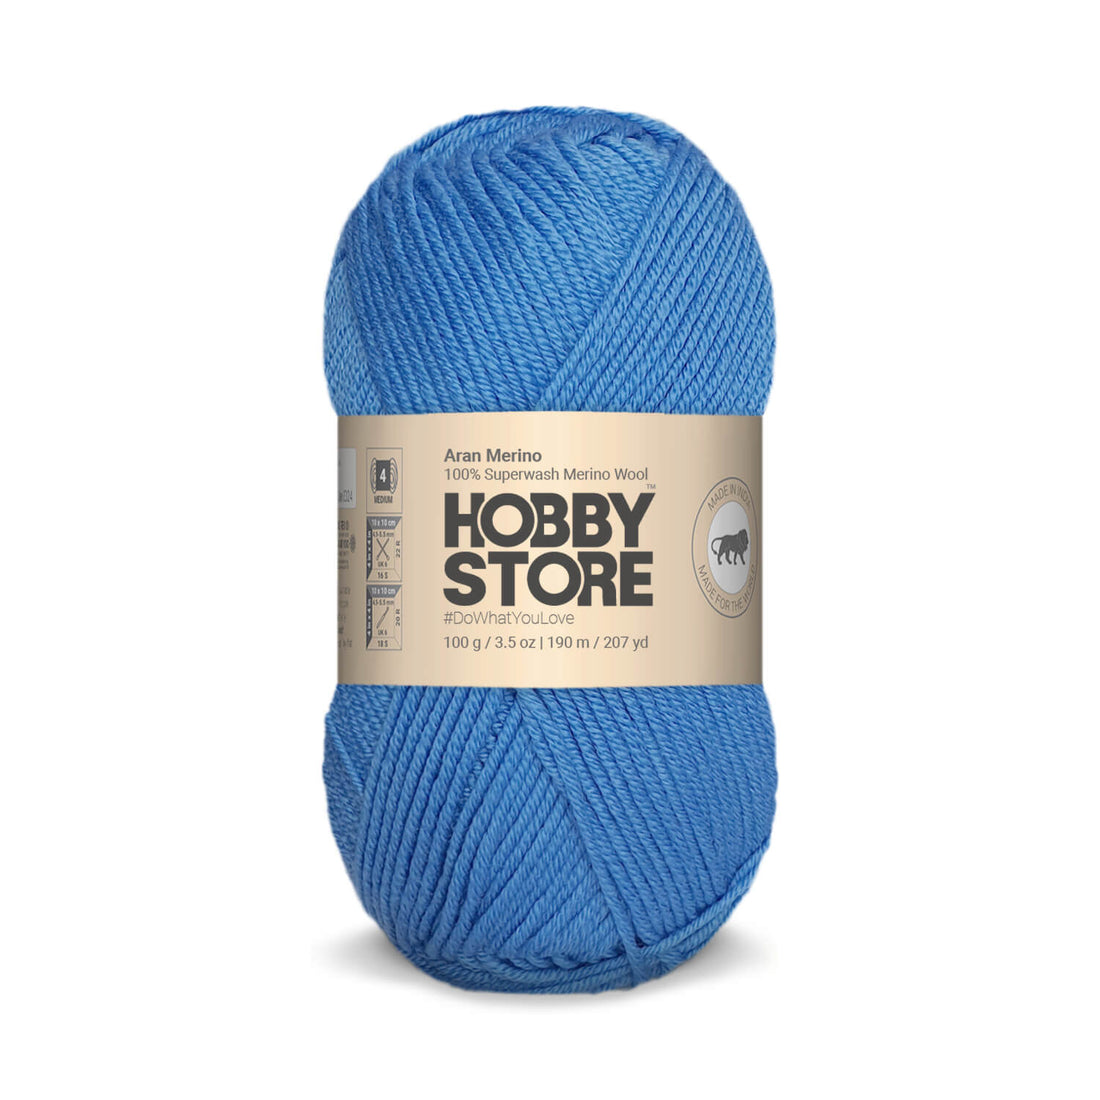 Aran Merino Wool by Hobby Store - Just Blue AM016